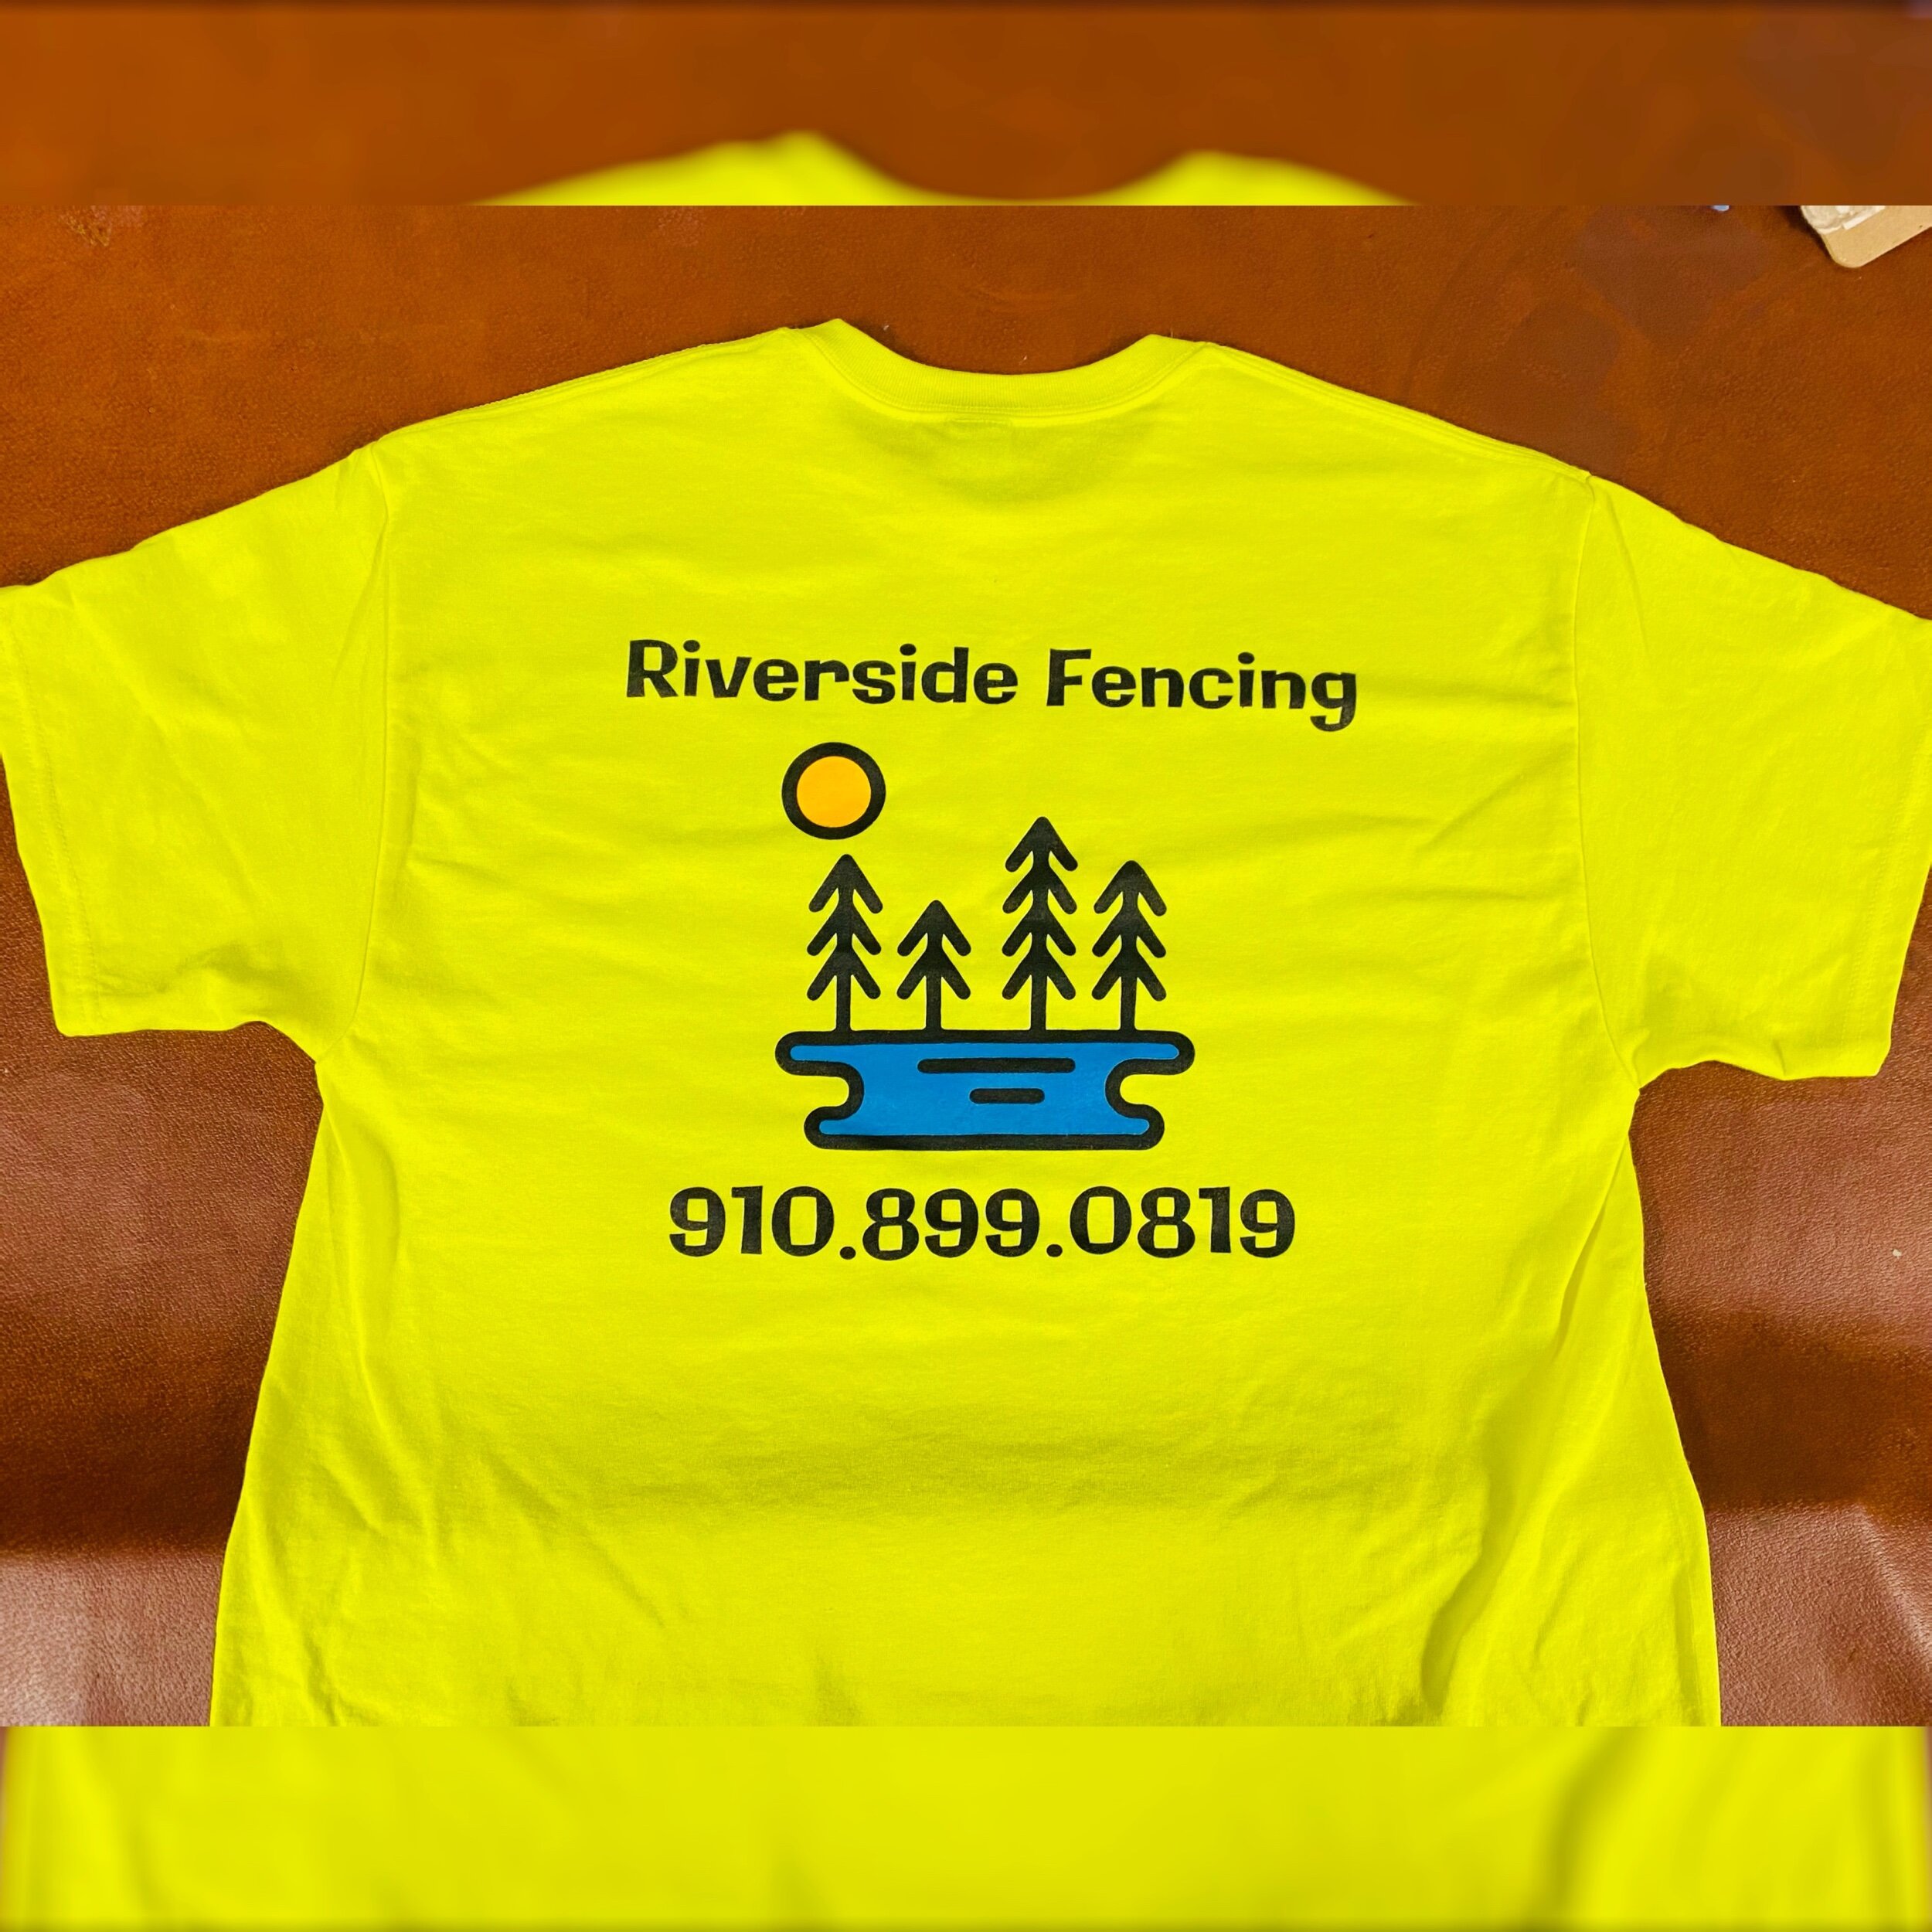 Riveside Fencing